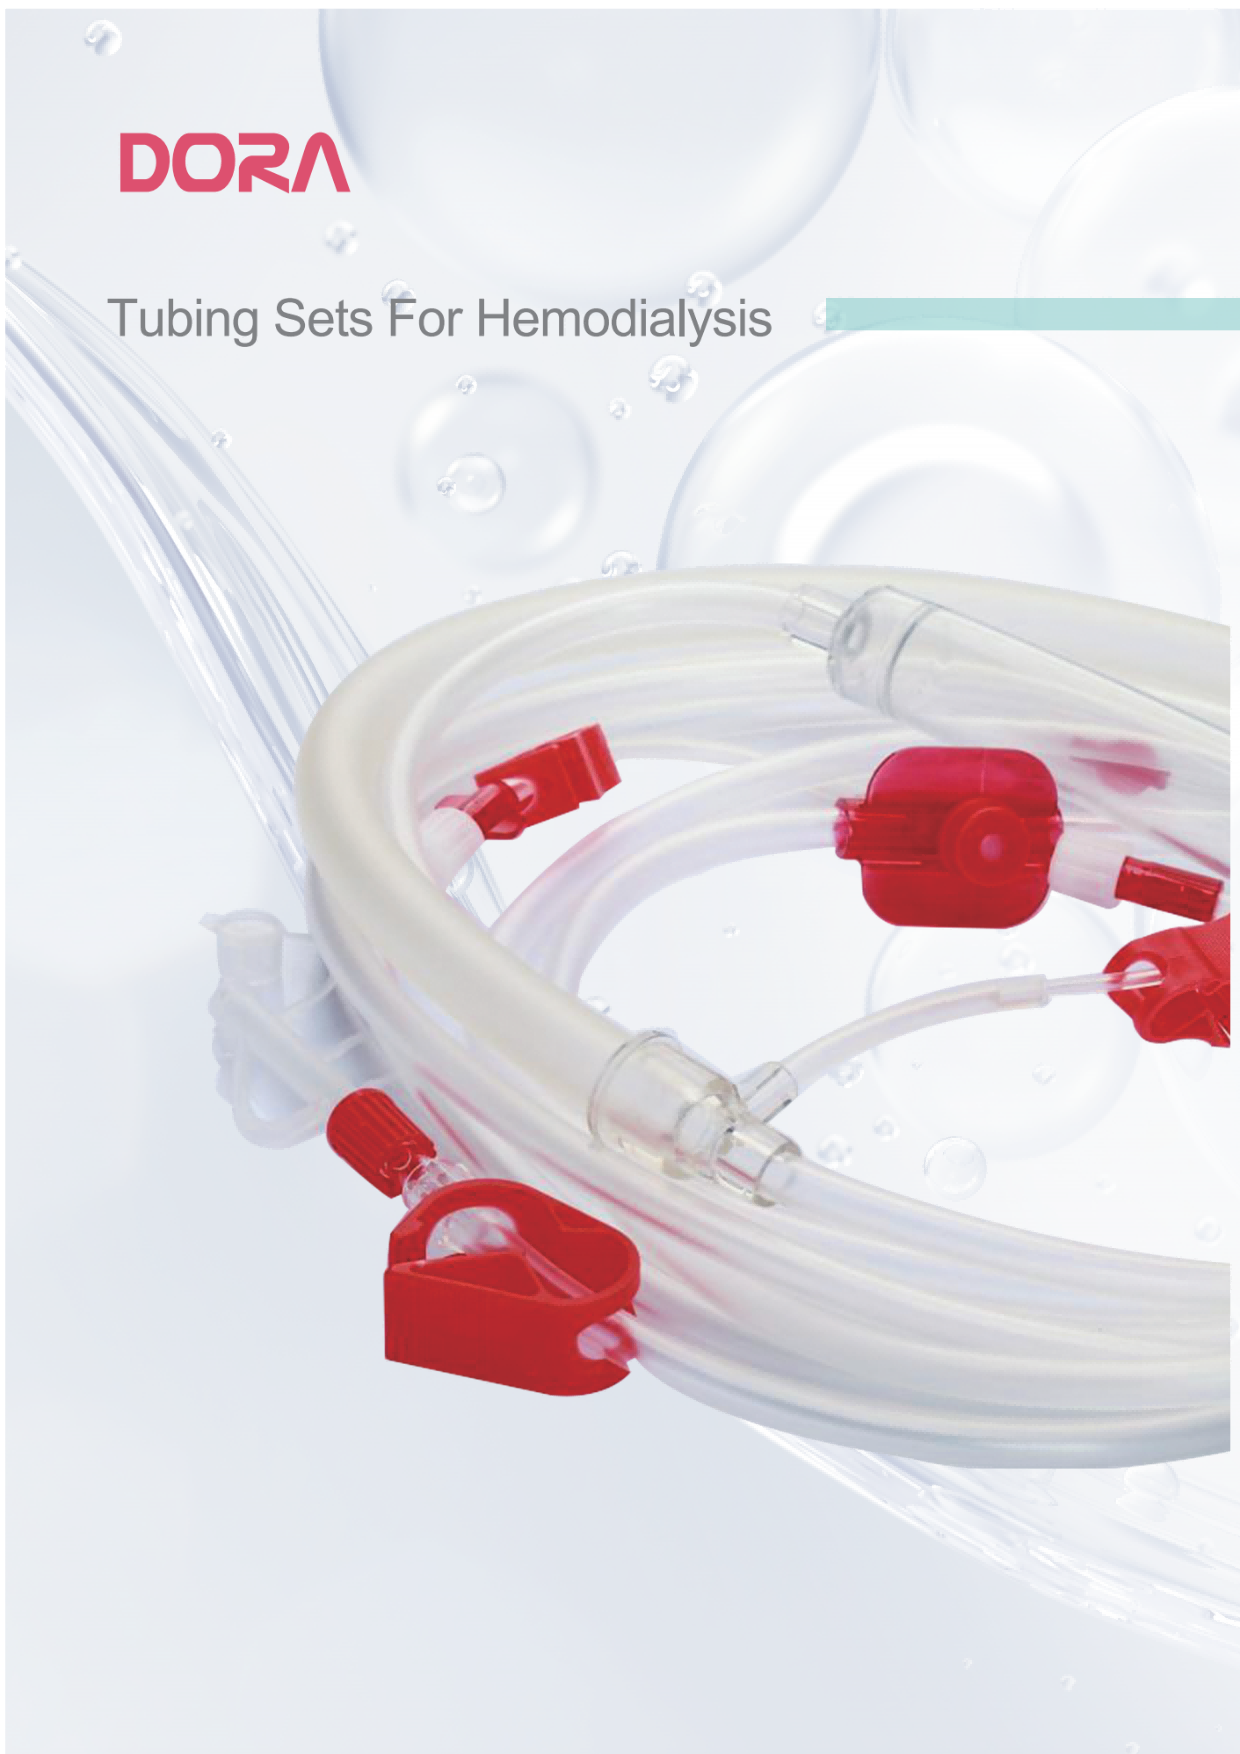 Tubing sets for Hemodialysis